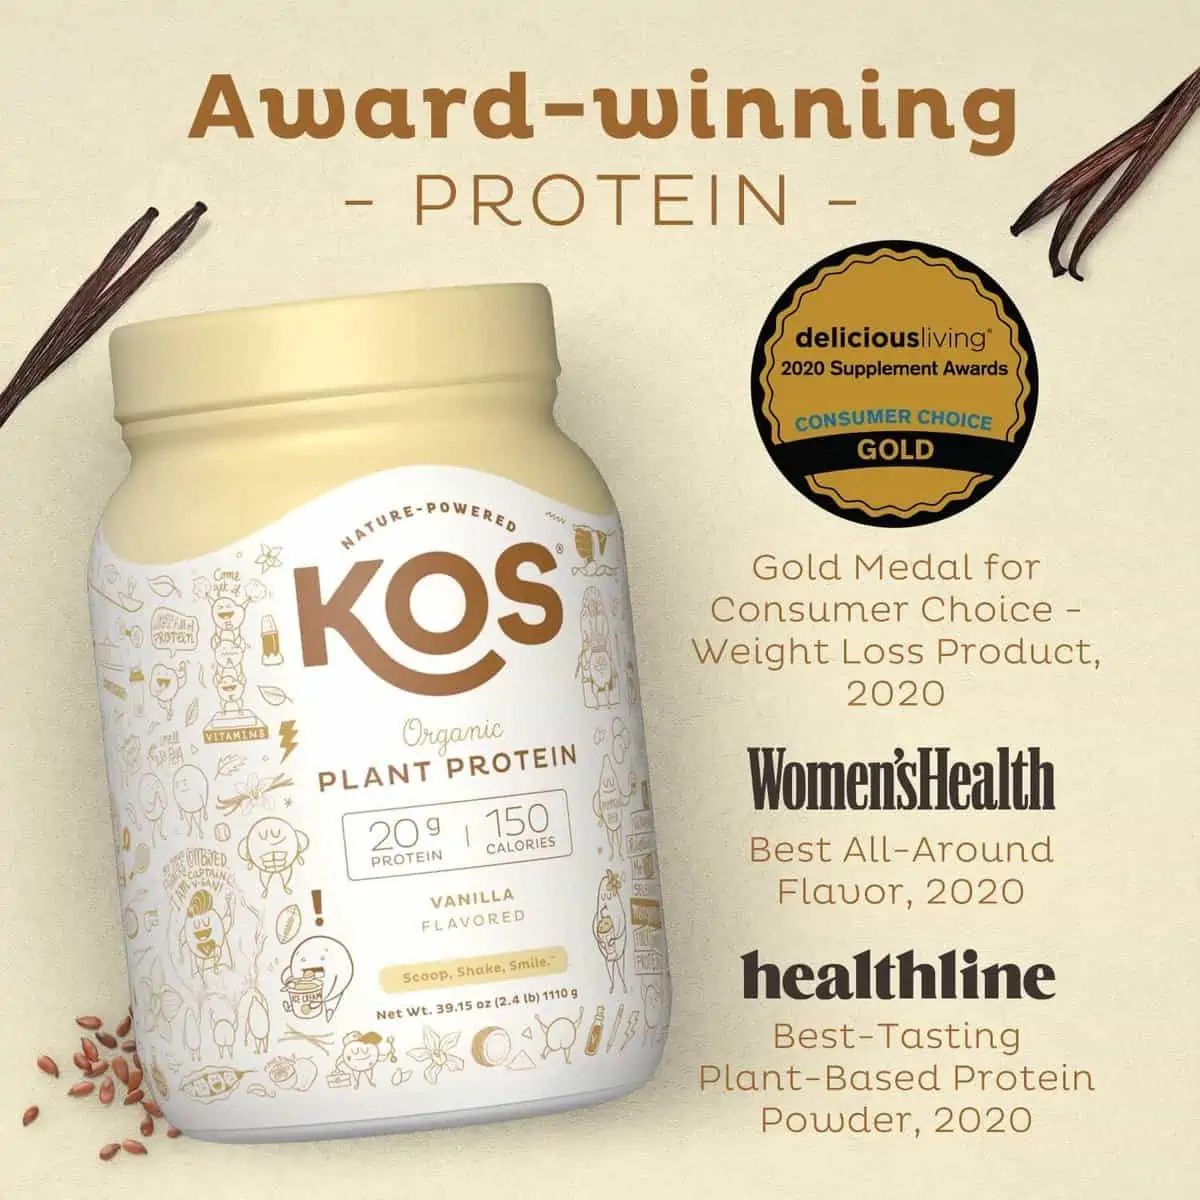 KOS Organic Plant Based Protein